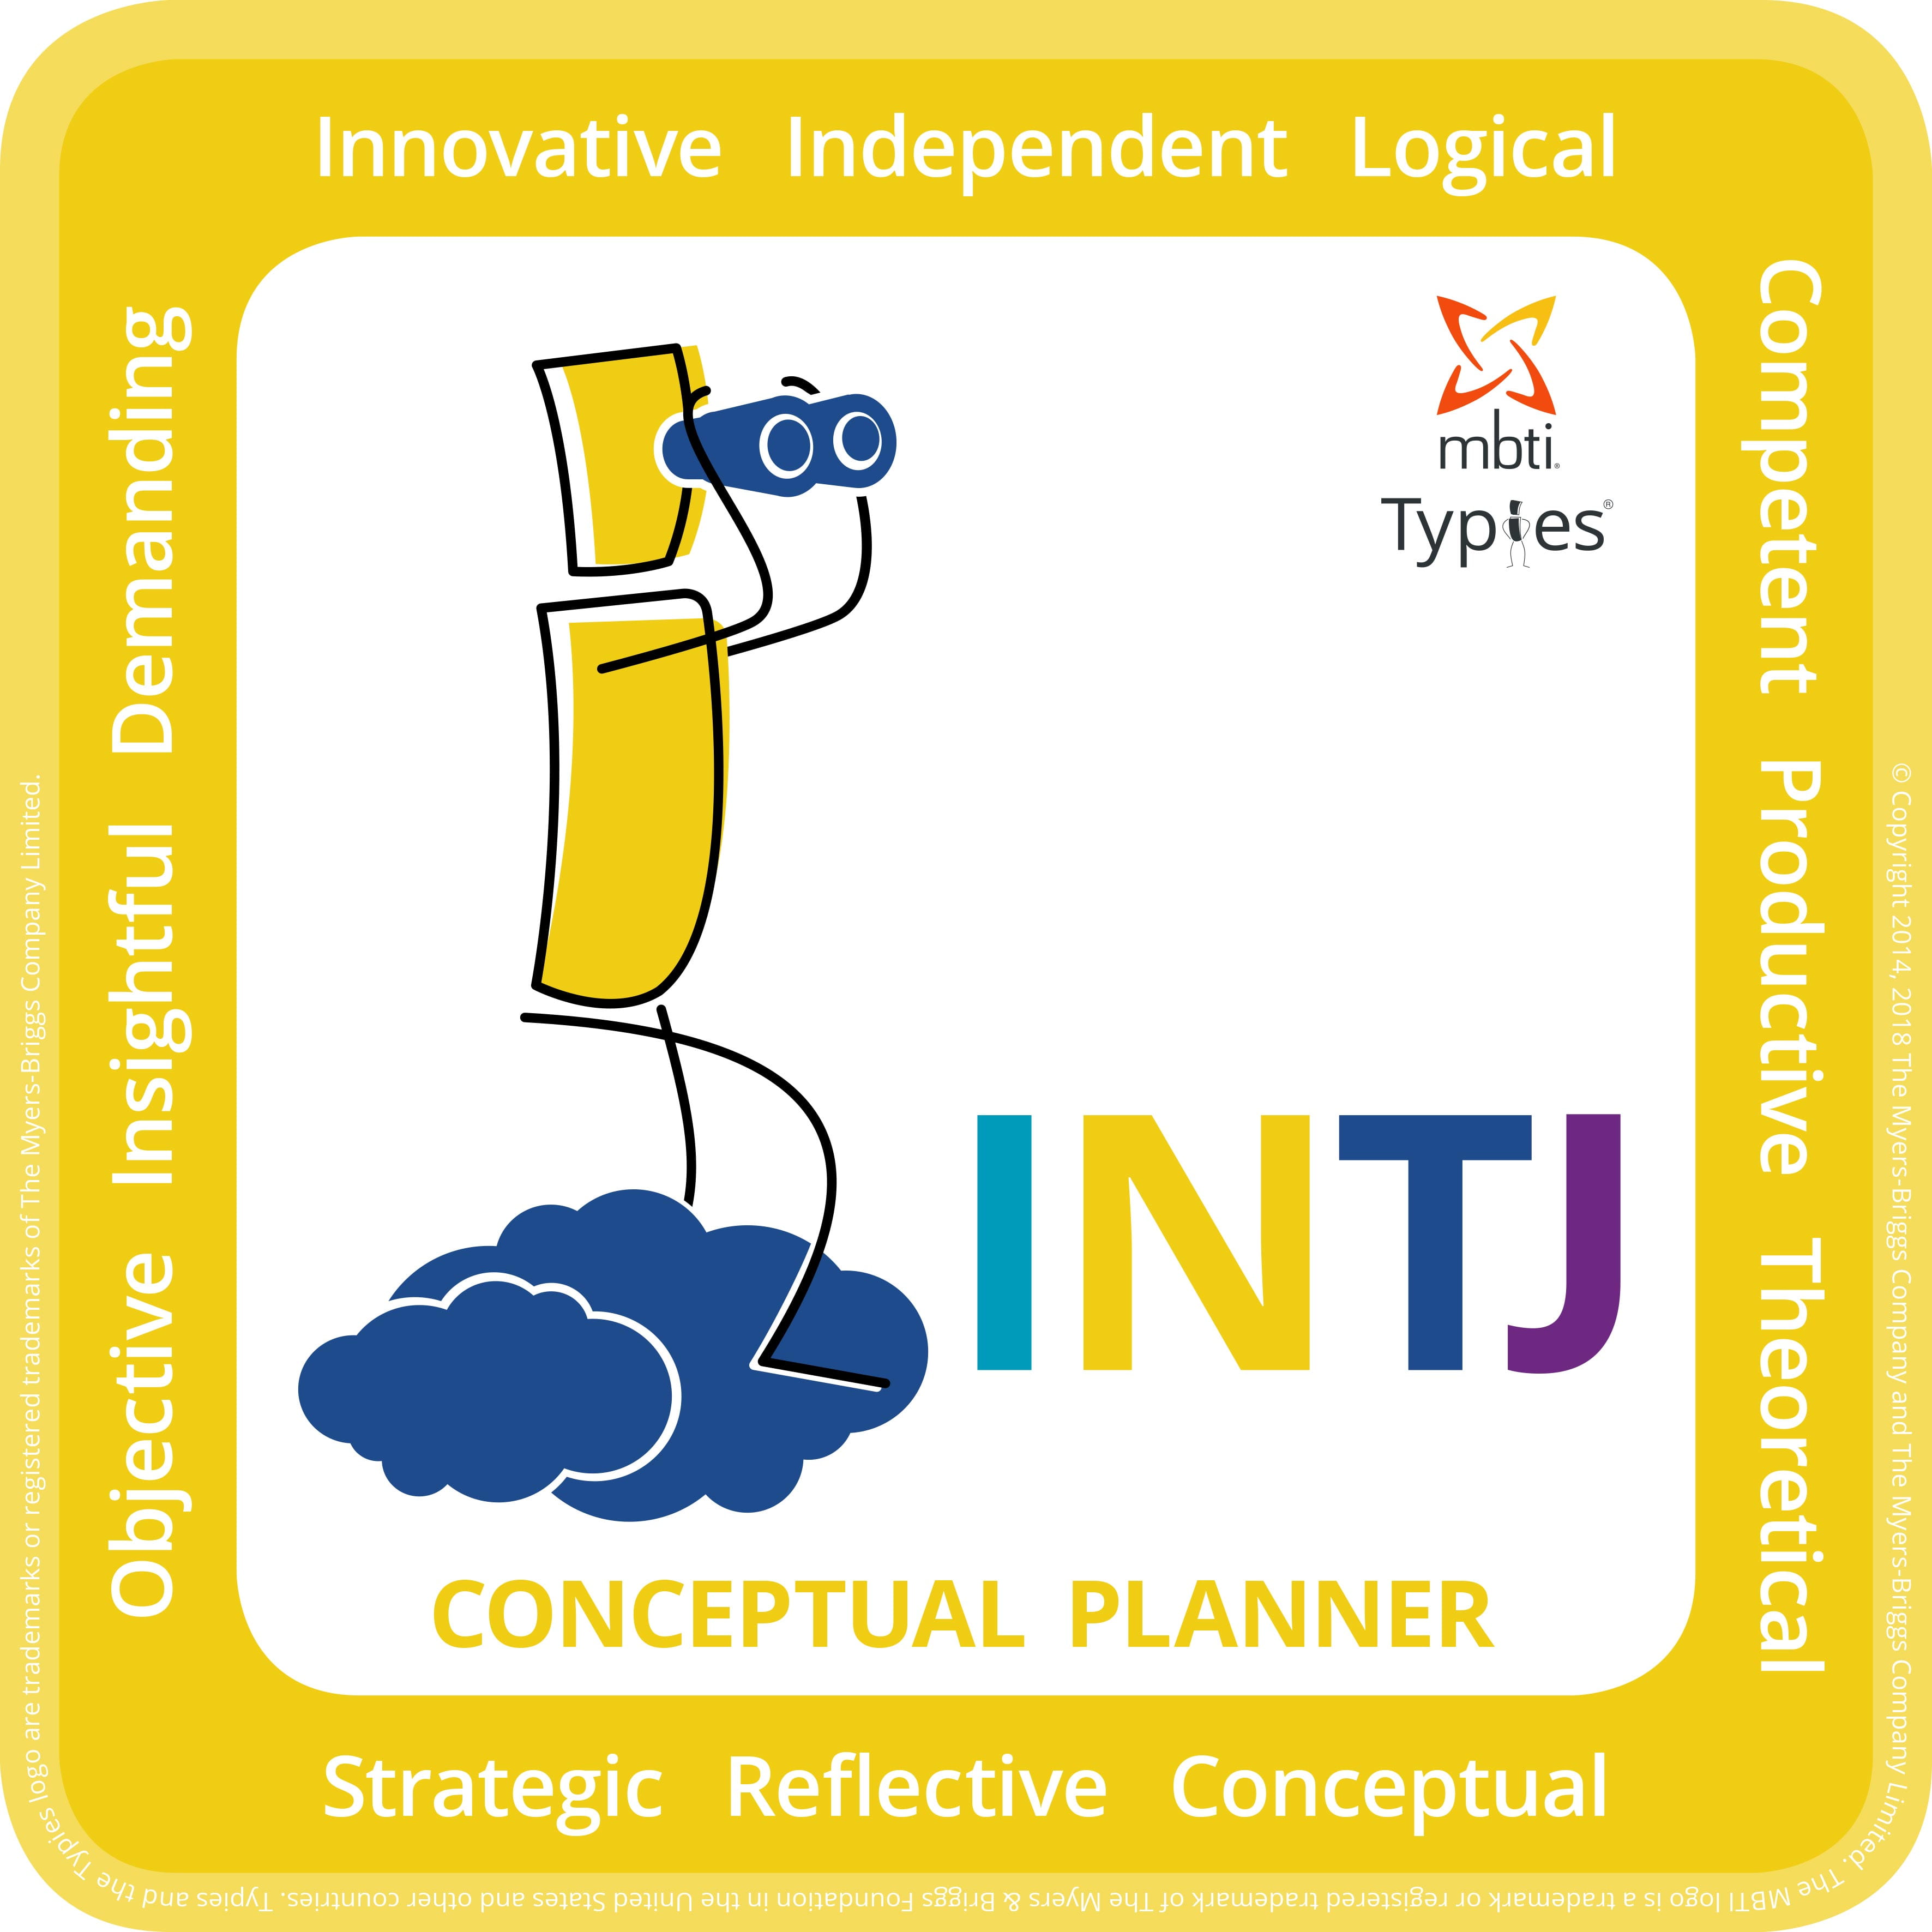 THE INTJ - Personality Traits